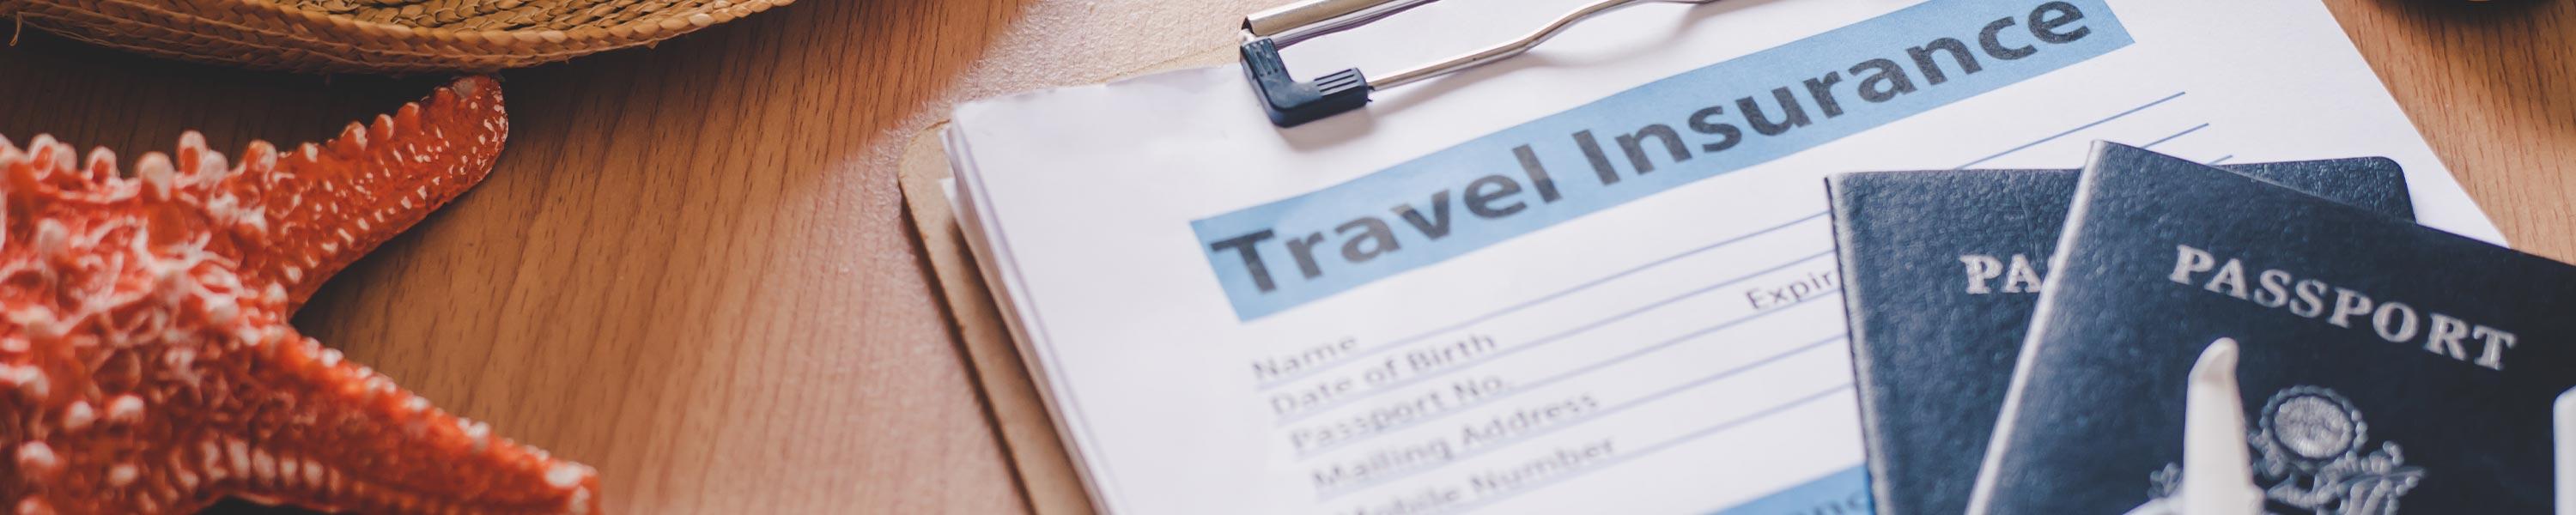 Travel Insurance documents